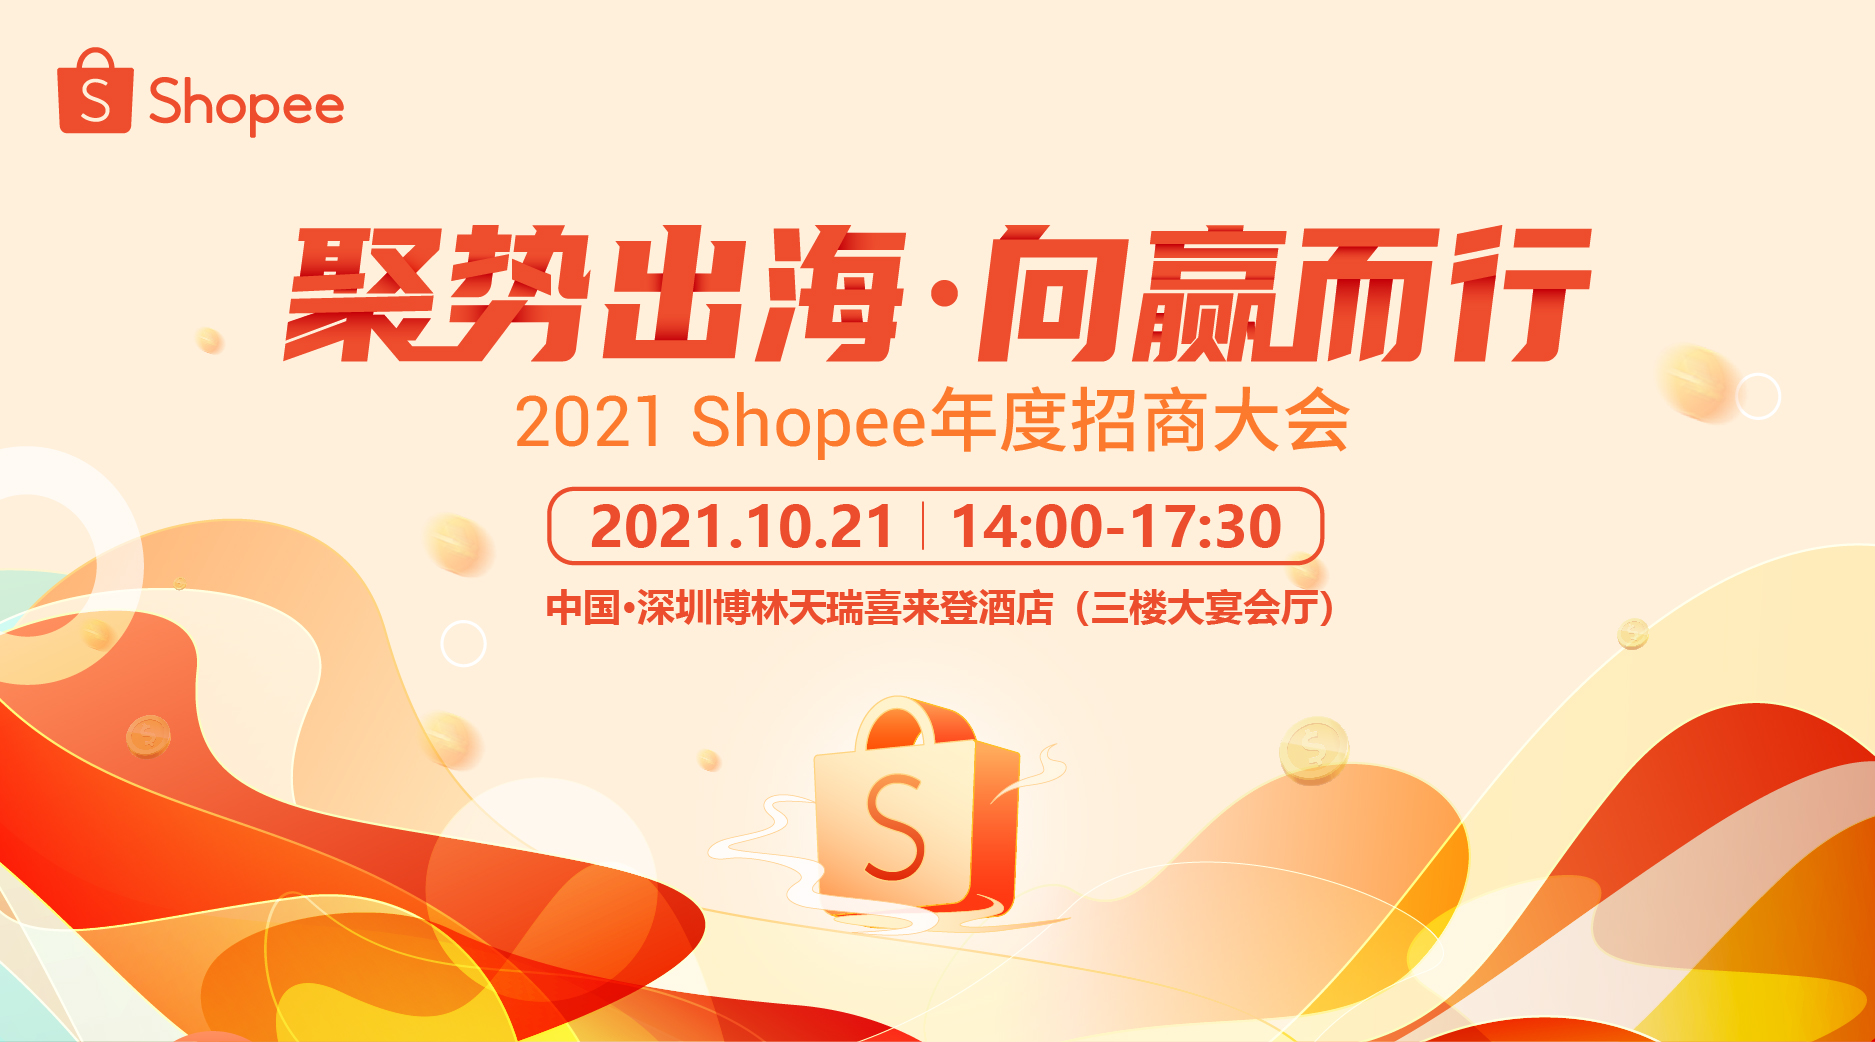 【Shopee官方活动】权威市场解读及旺季爆单玩法，2021 Shopee年度招商大会开启报名！